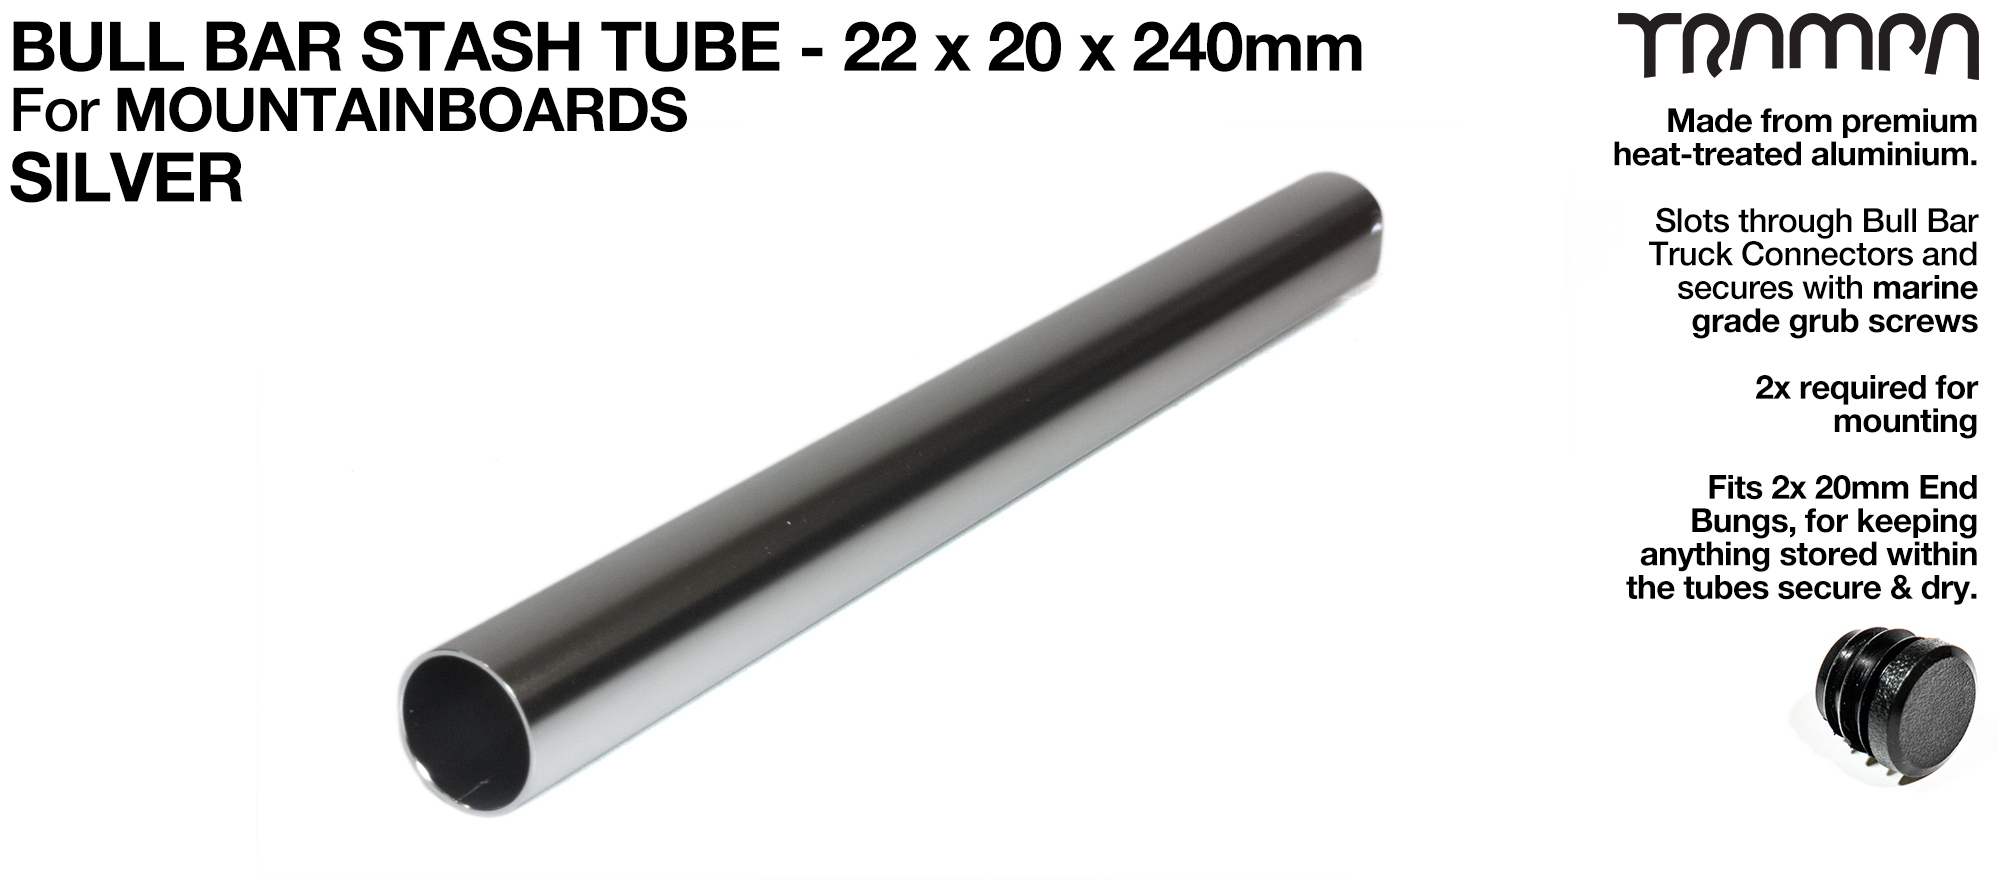 Mountainboard Bull Bar Hollow Aluminium Stash Tube - SILVER 22x20x240mm 